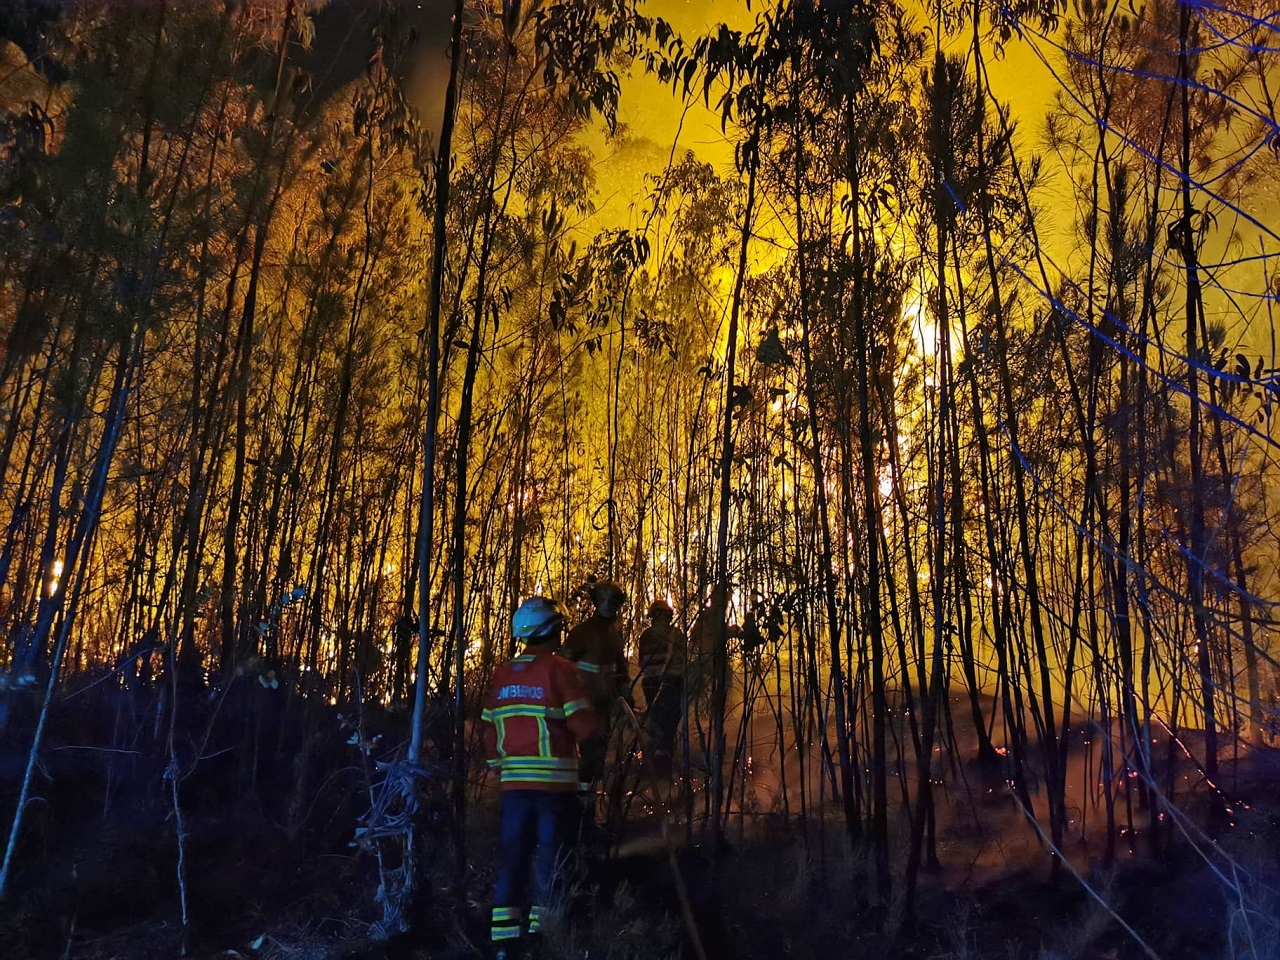 foto de floresta em chamas à noite